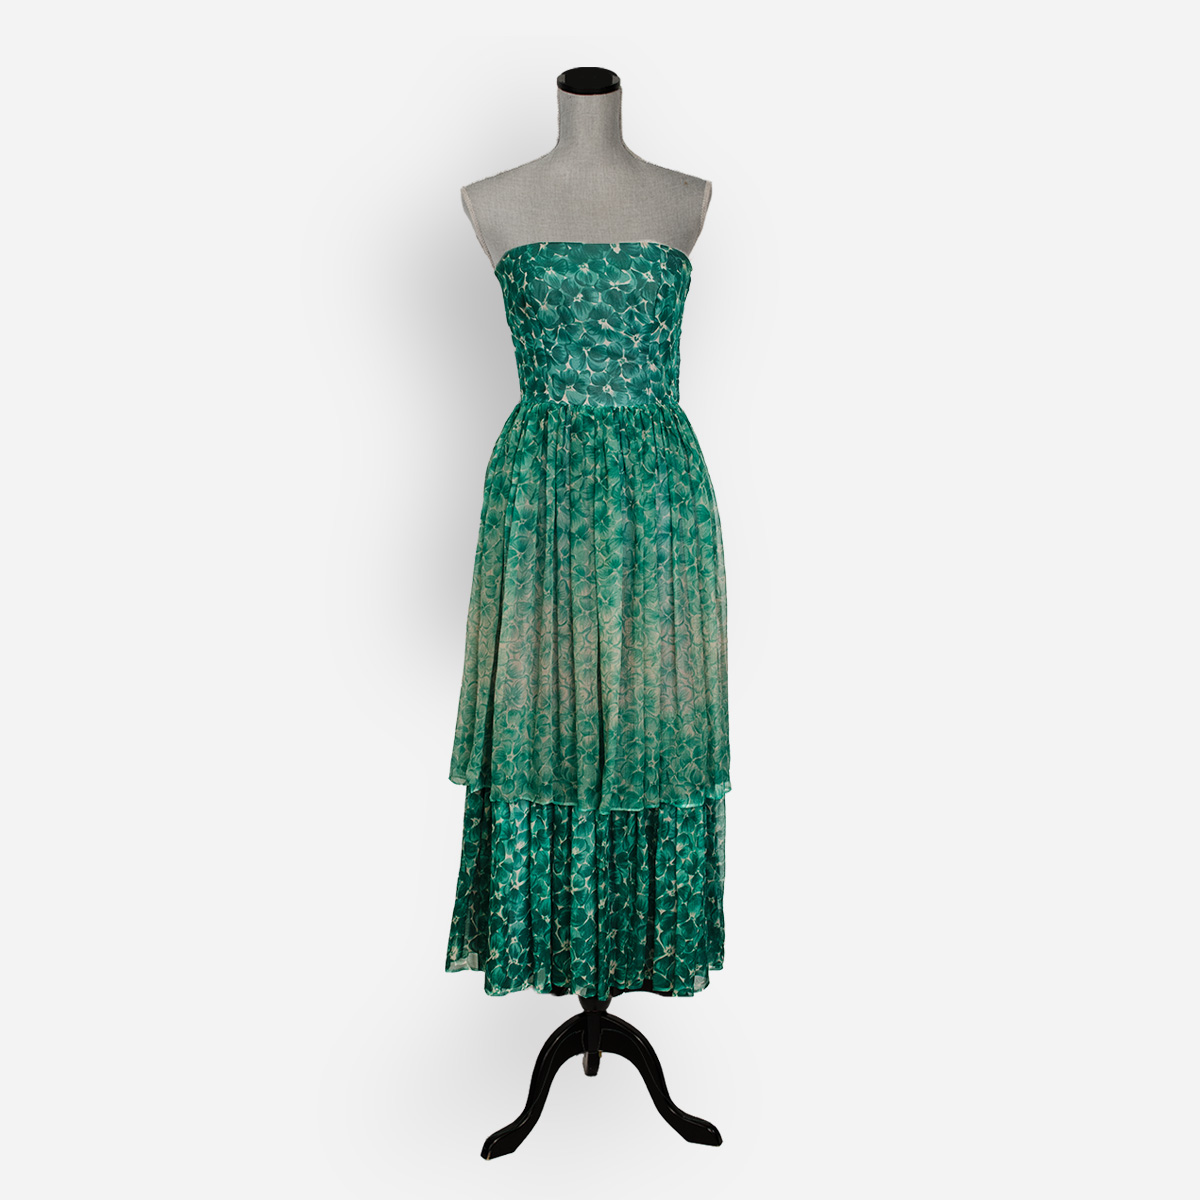 French green silk chiffon dress